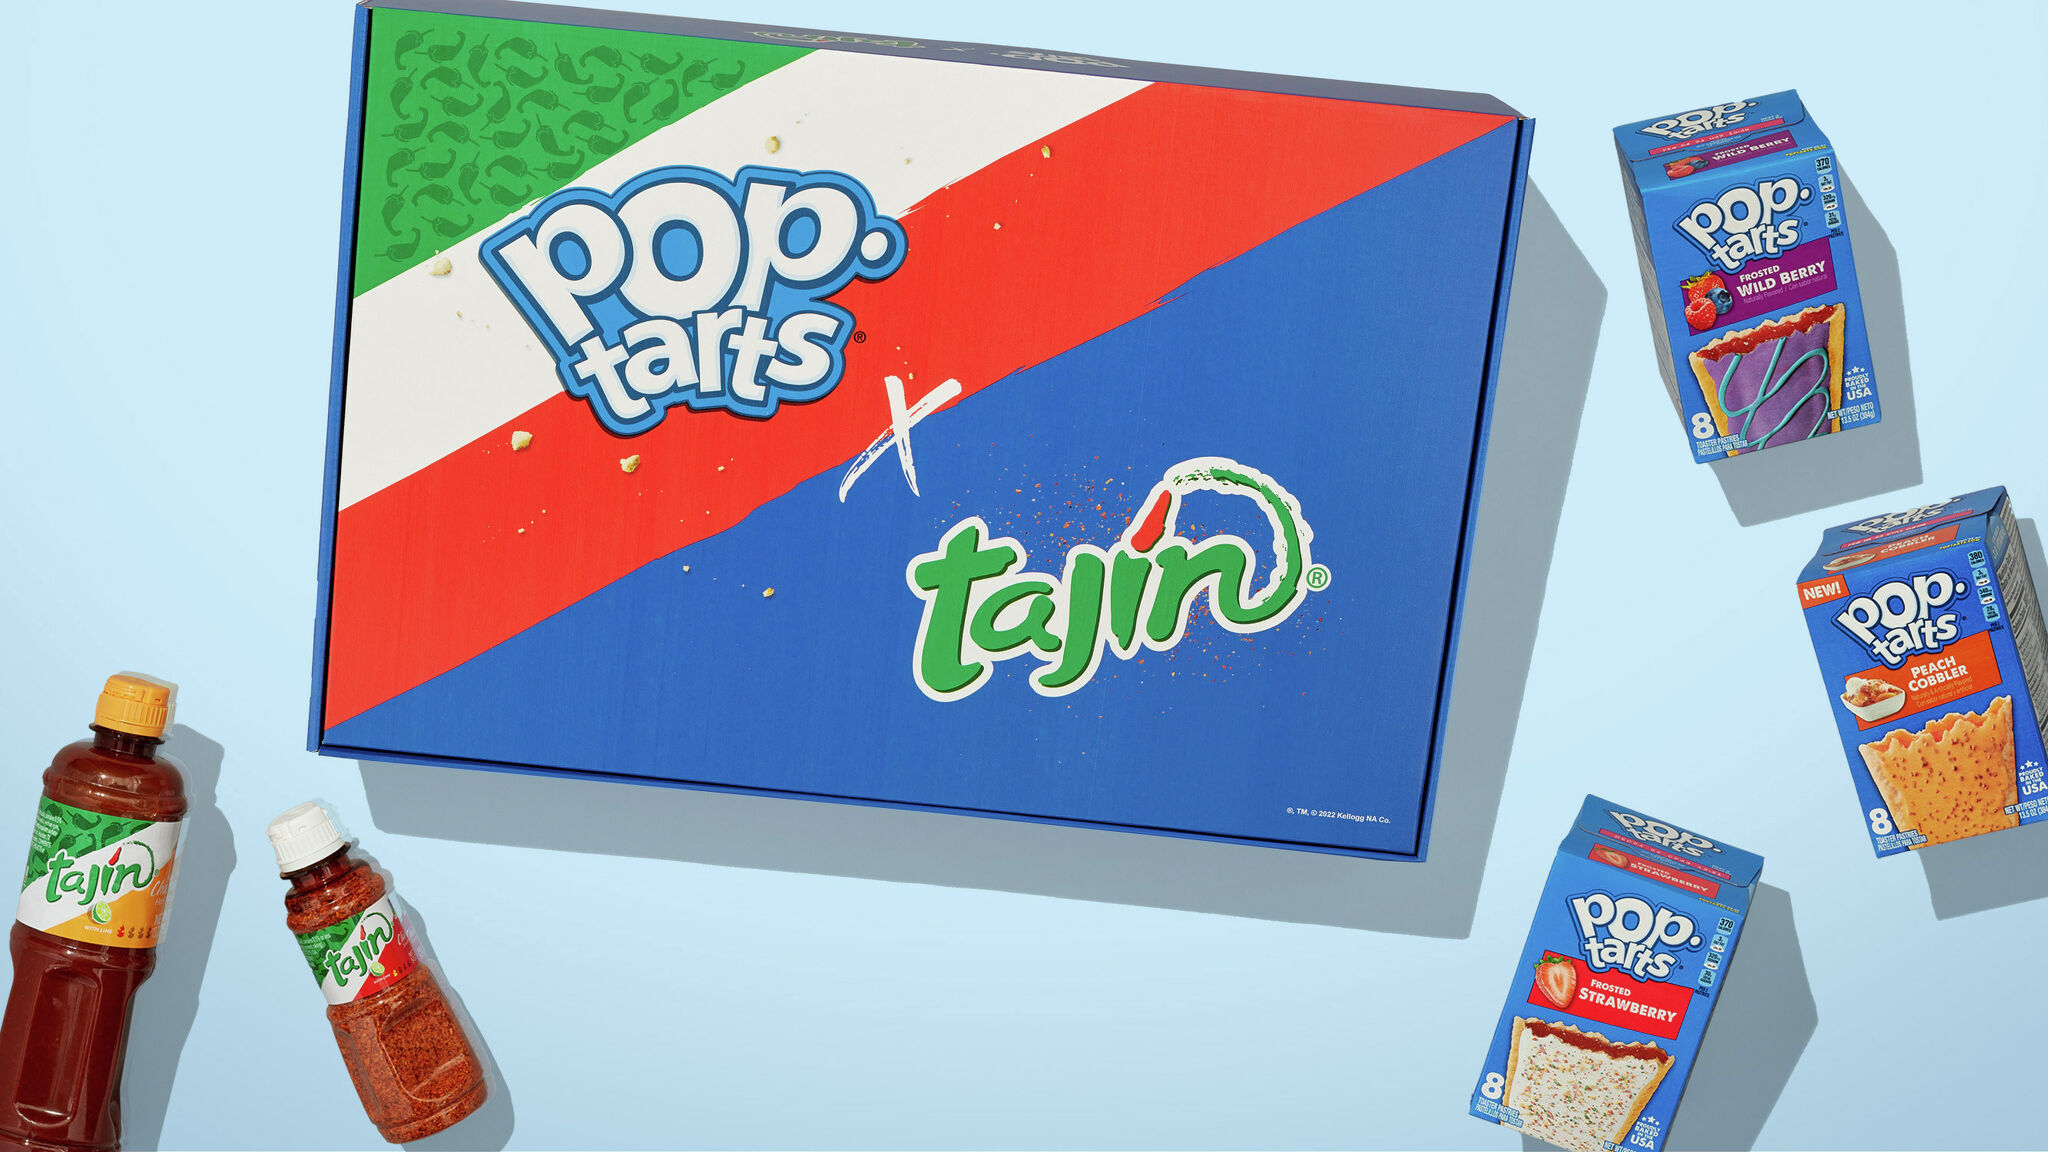 Kellogg releases new Pop-Tarts flavour - FoodBev Media